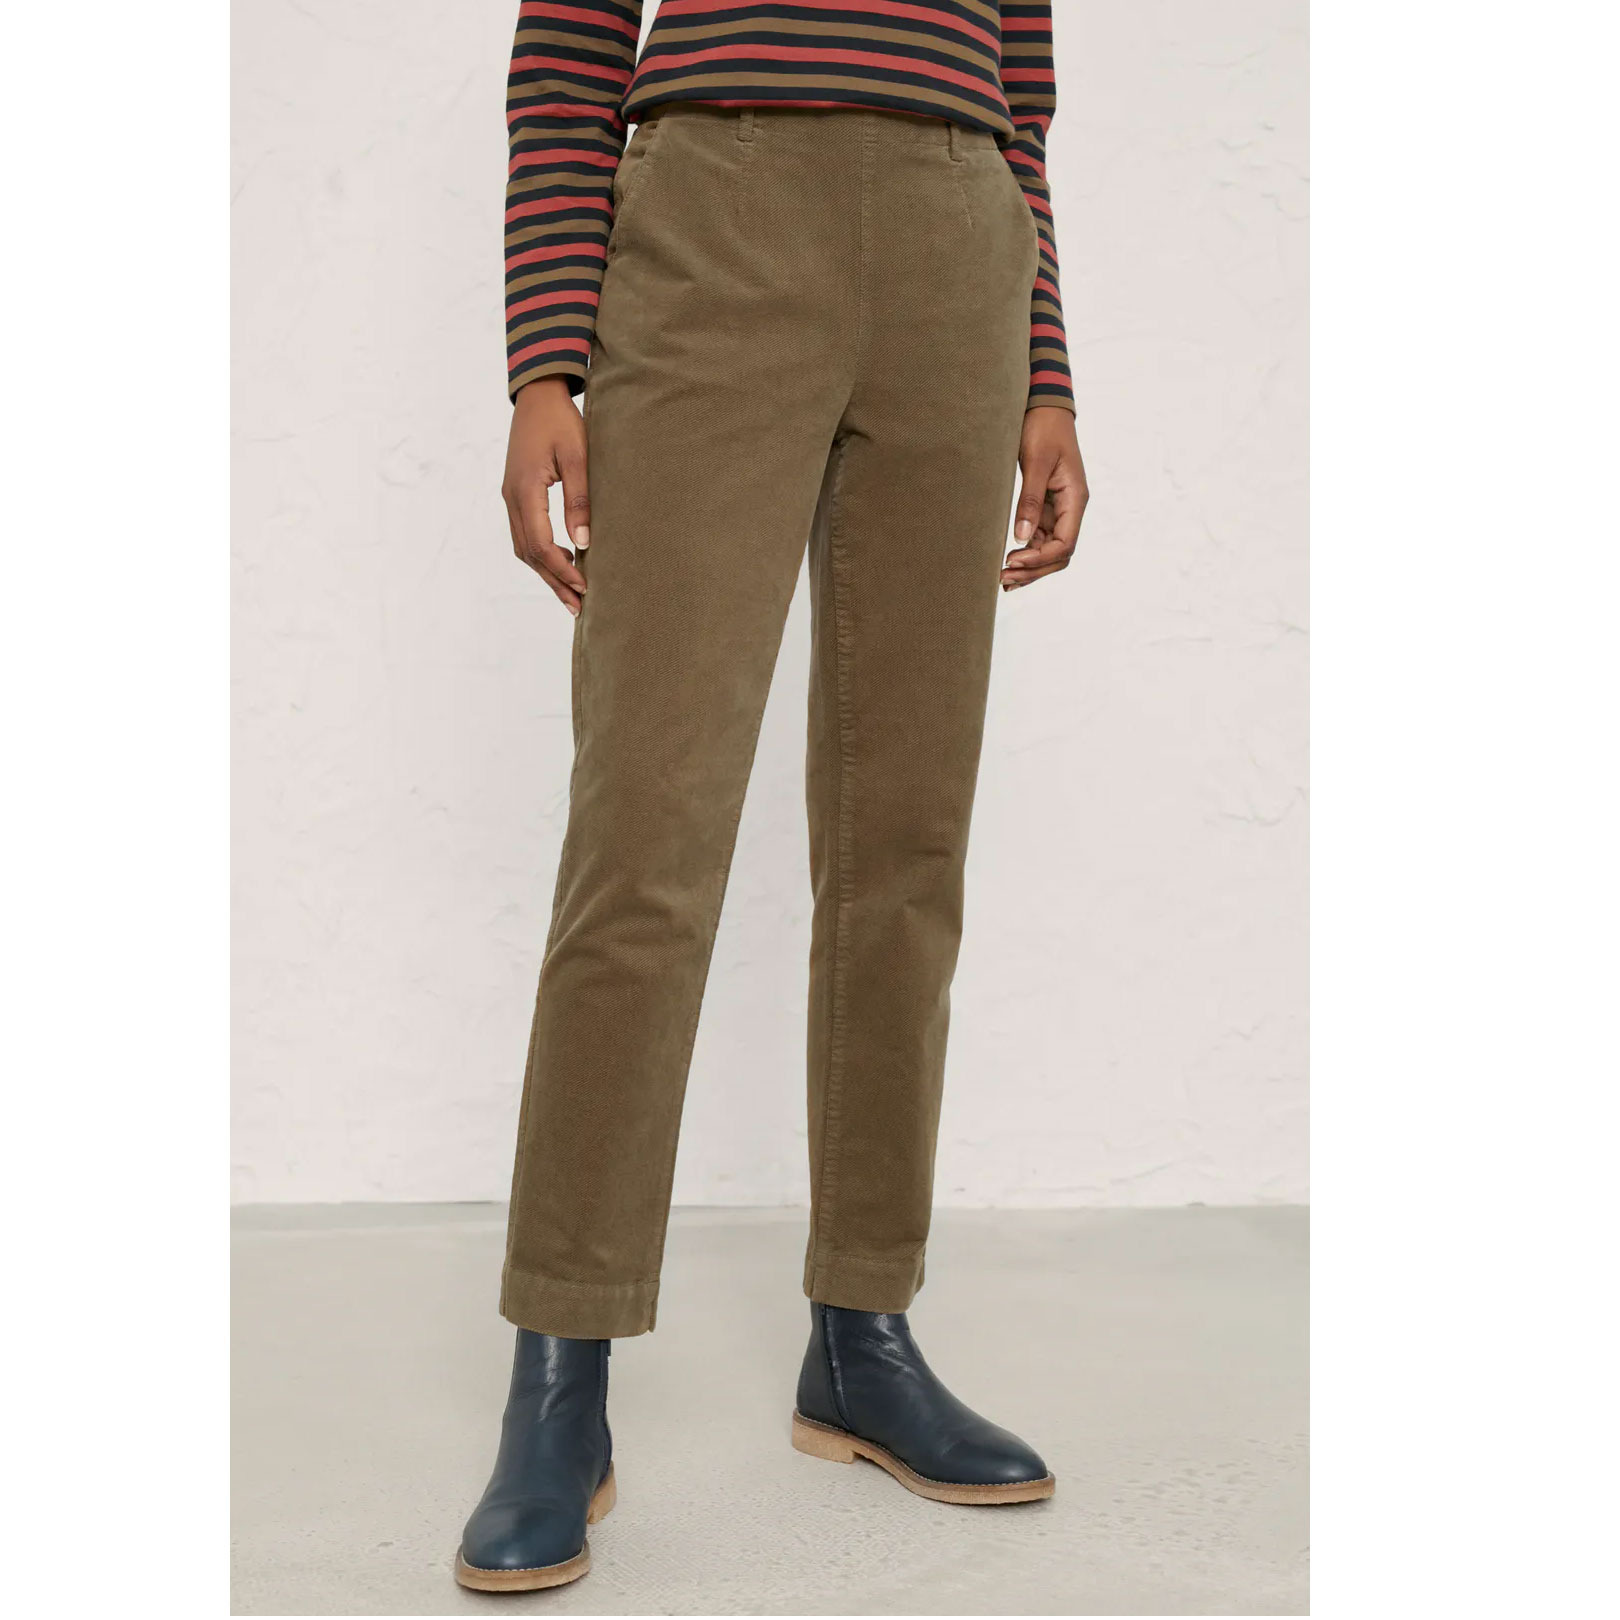 SEASALT Hose Crackington Trousers, Farbe: Dark Seagrass , Größe 52